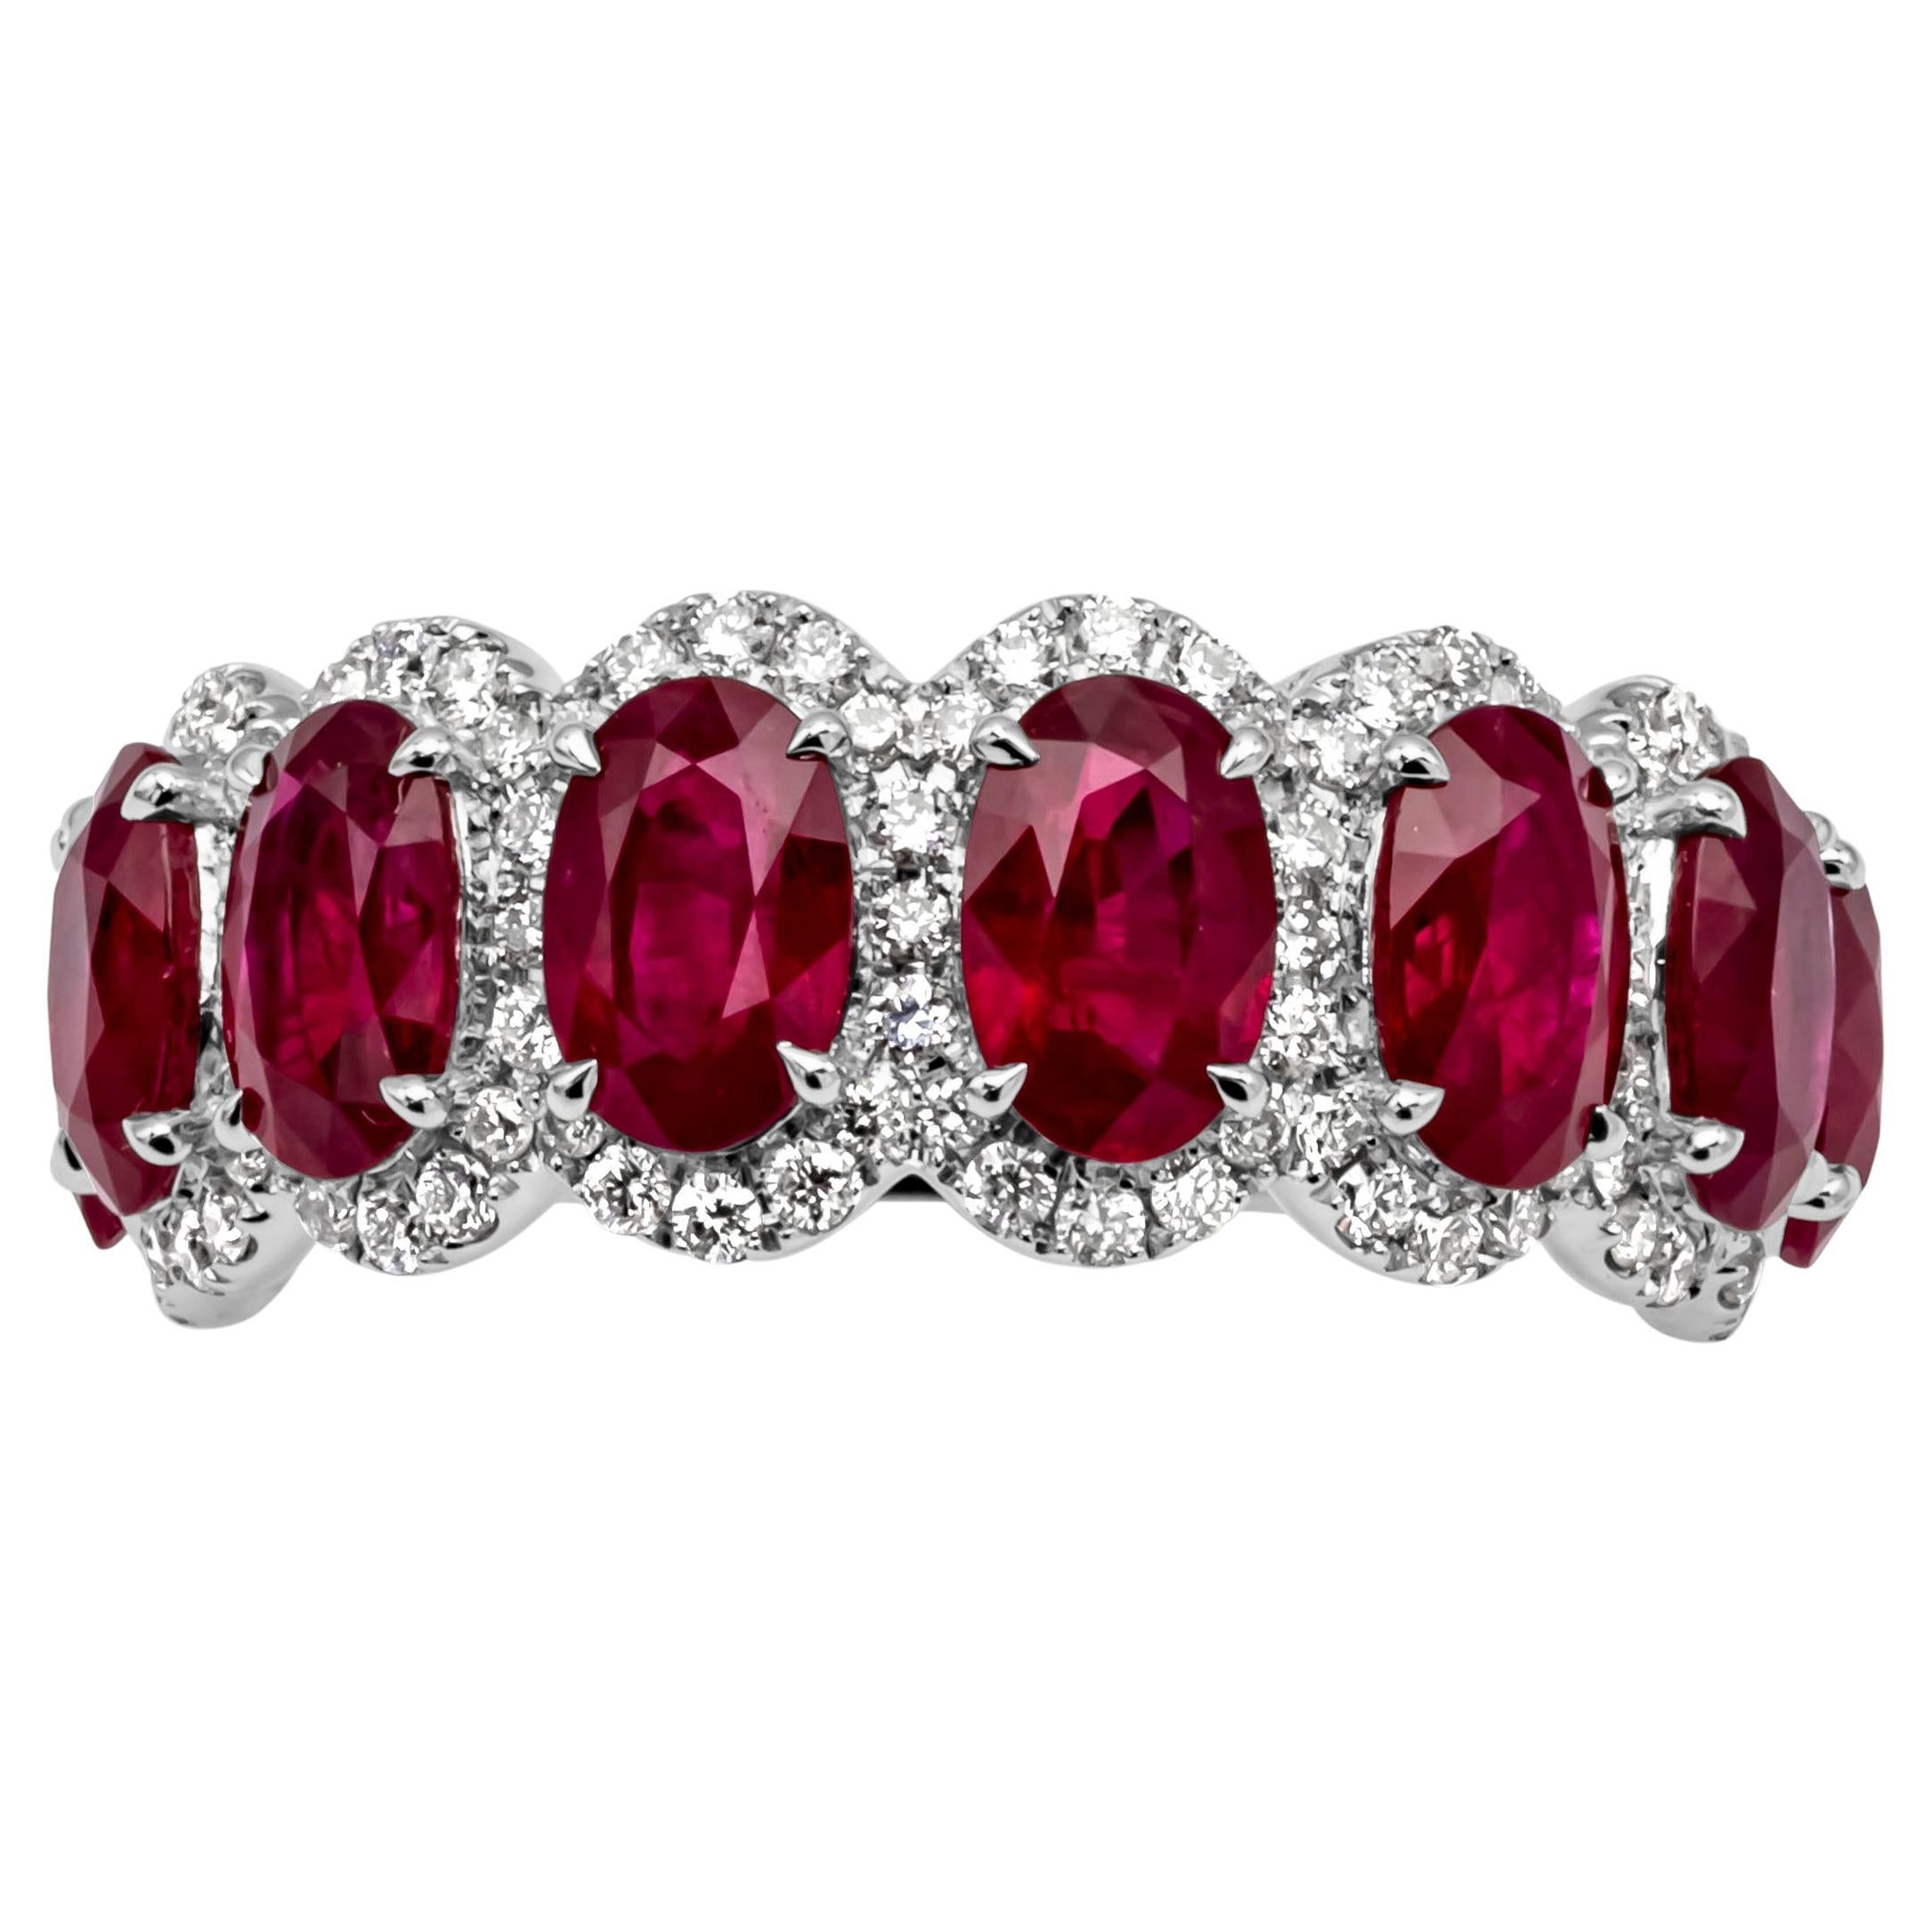 Roman Malakov 4.74 Carats Oval Cut Ruby & Diamonds Halo Eight Stone Wedding Band For Sale